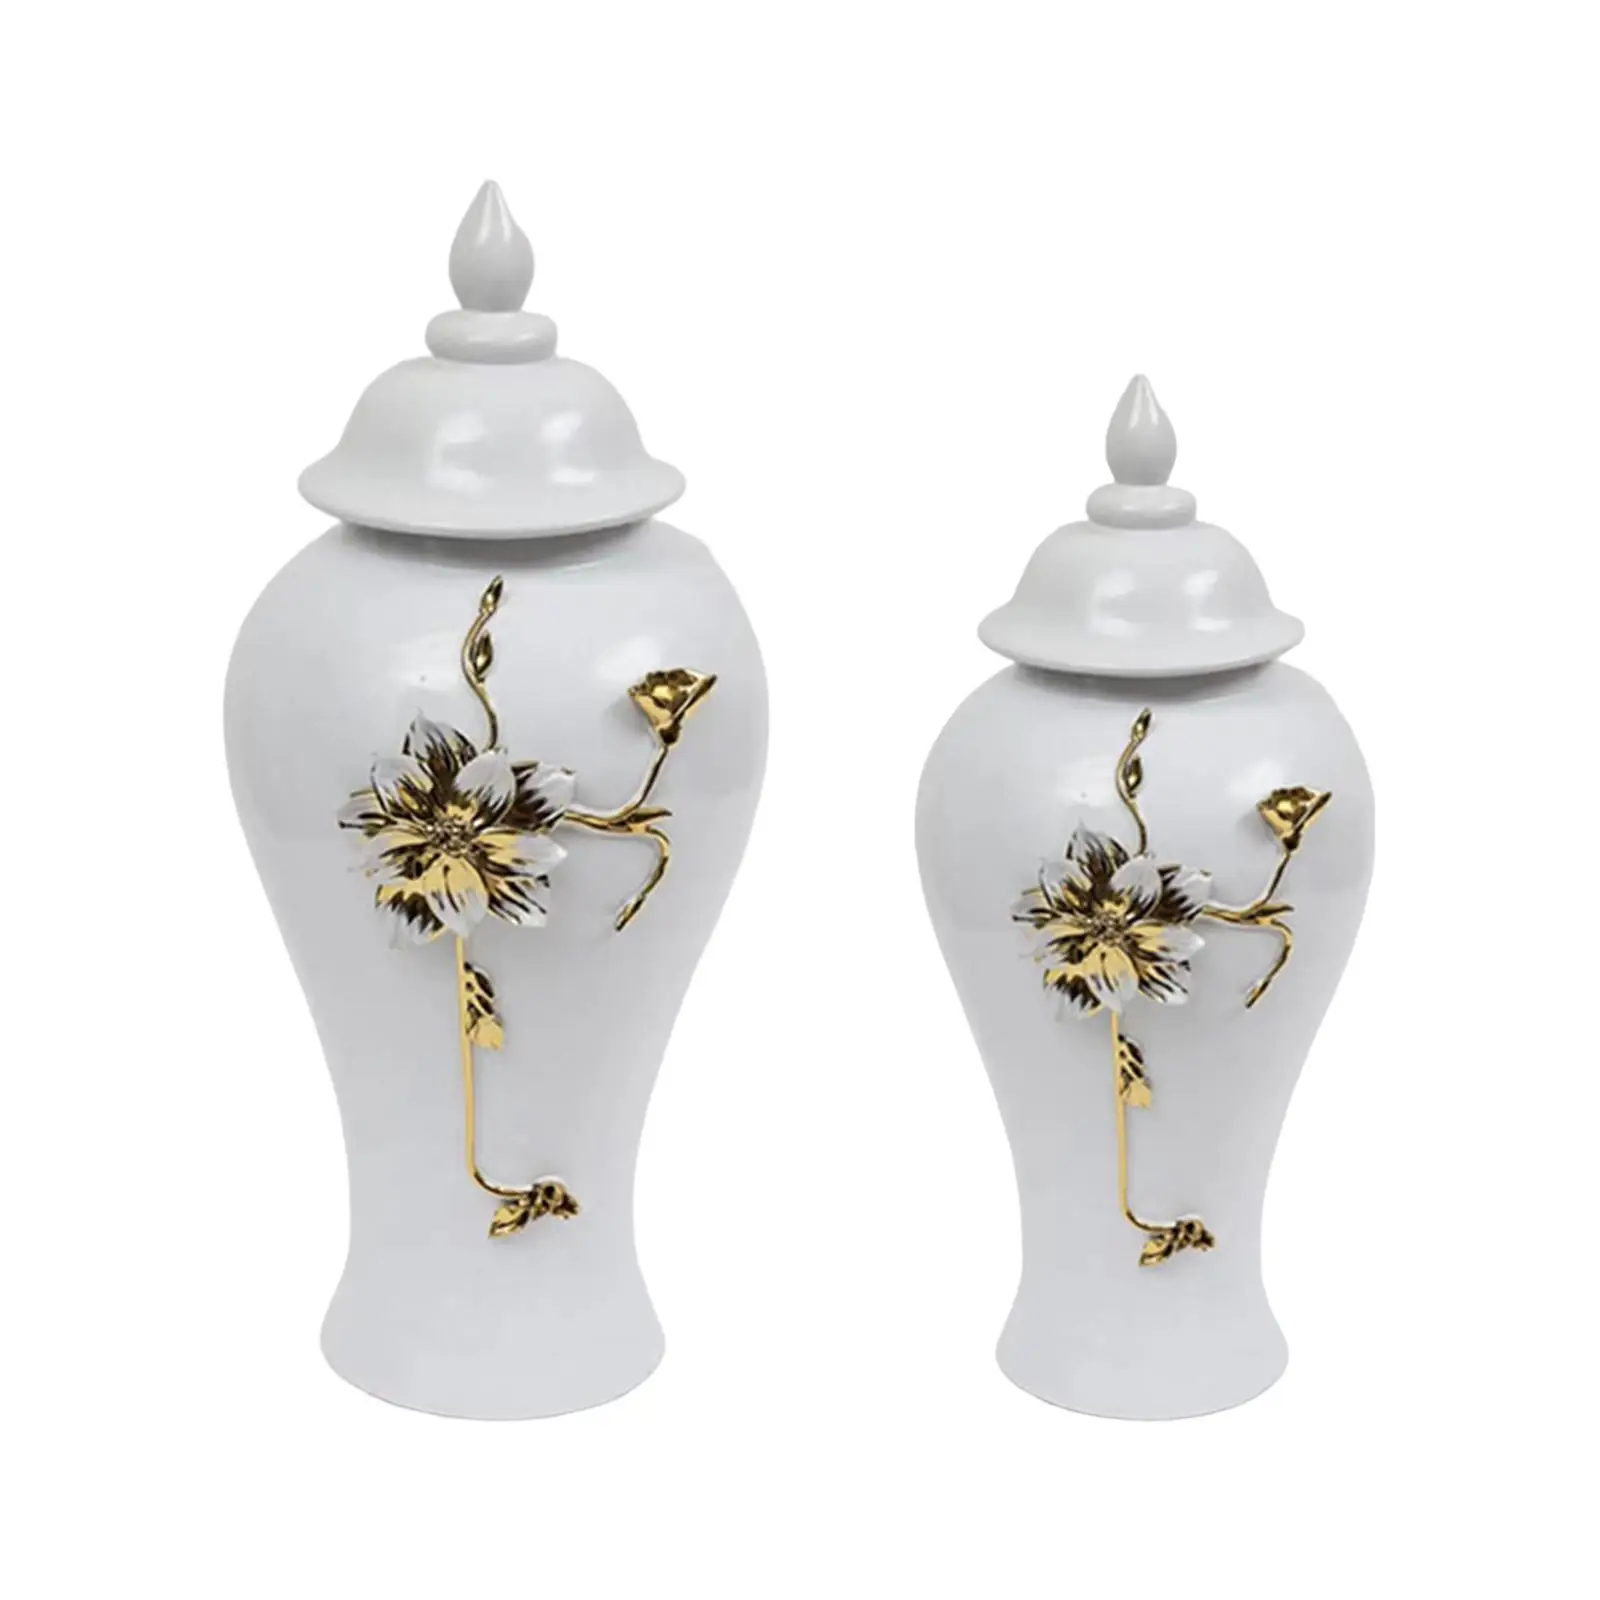 Porcelain Vase Temple Jar with Lid Oriental Style Ginger Jar Room Decor Multi Purpose Fine Glaze Finish Delicate